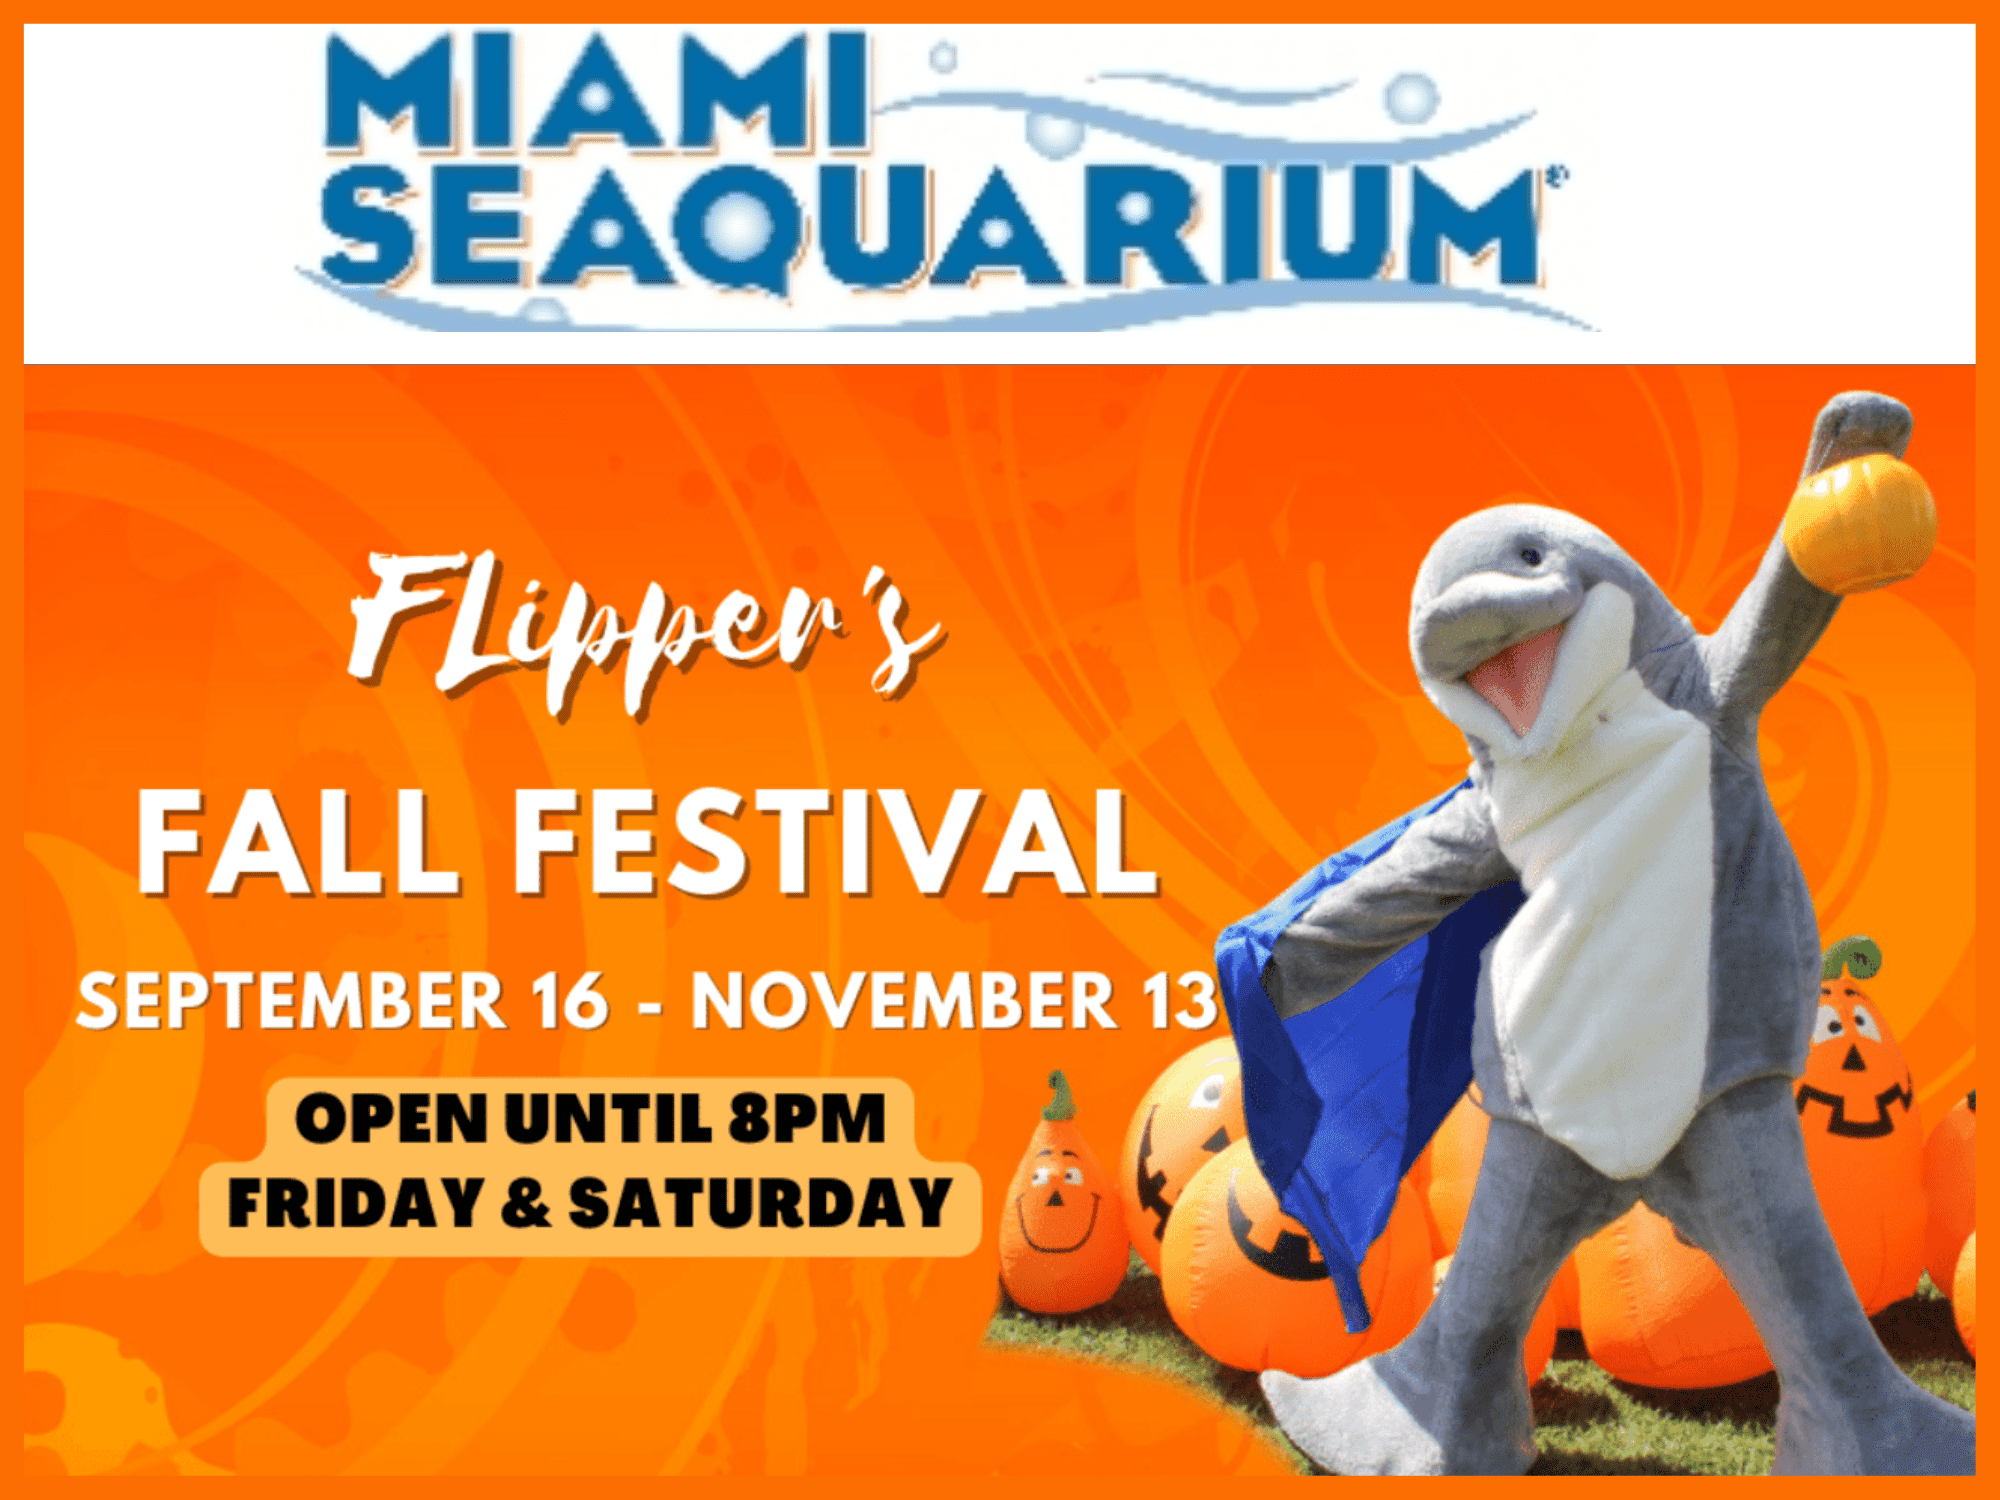 Miami Seaquarium - Flippers Fall Festival